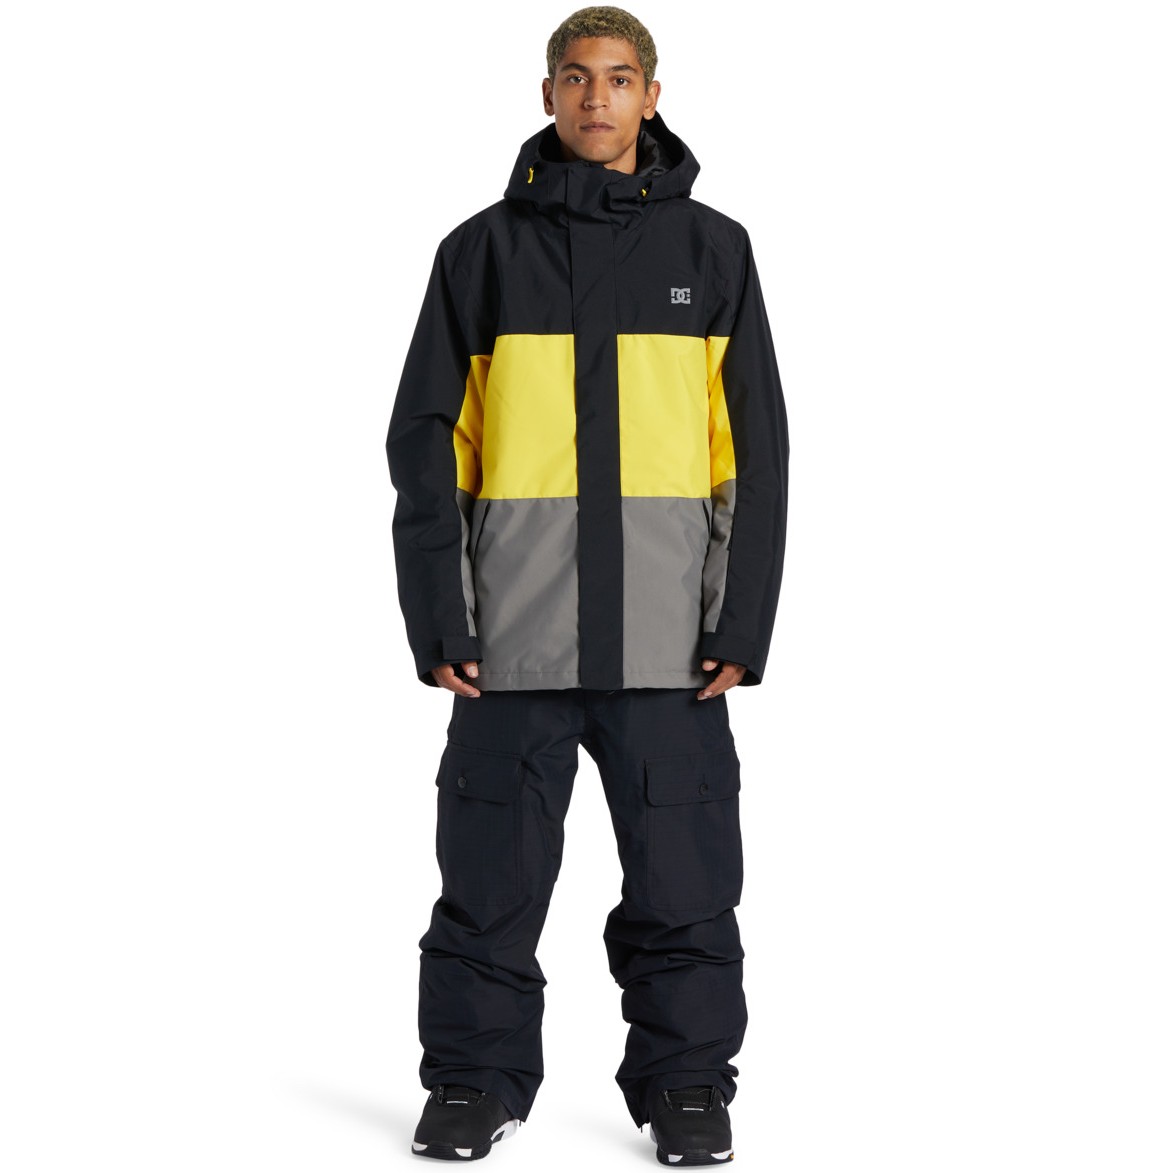 DC Defy Men's Technical Ski/Snowboard Jacket